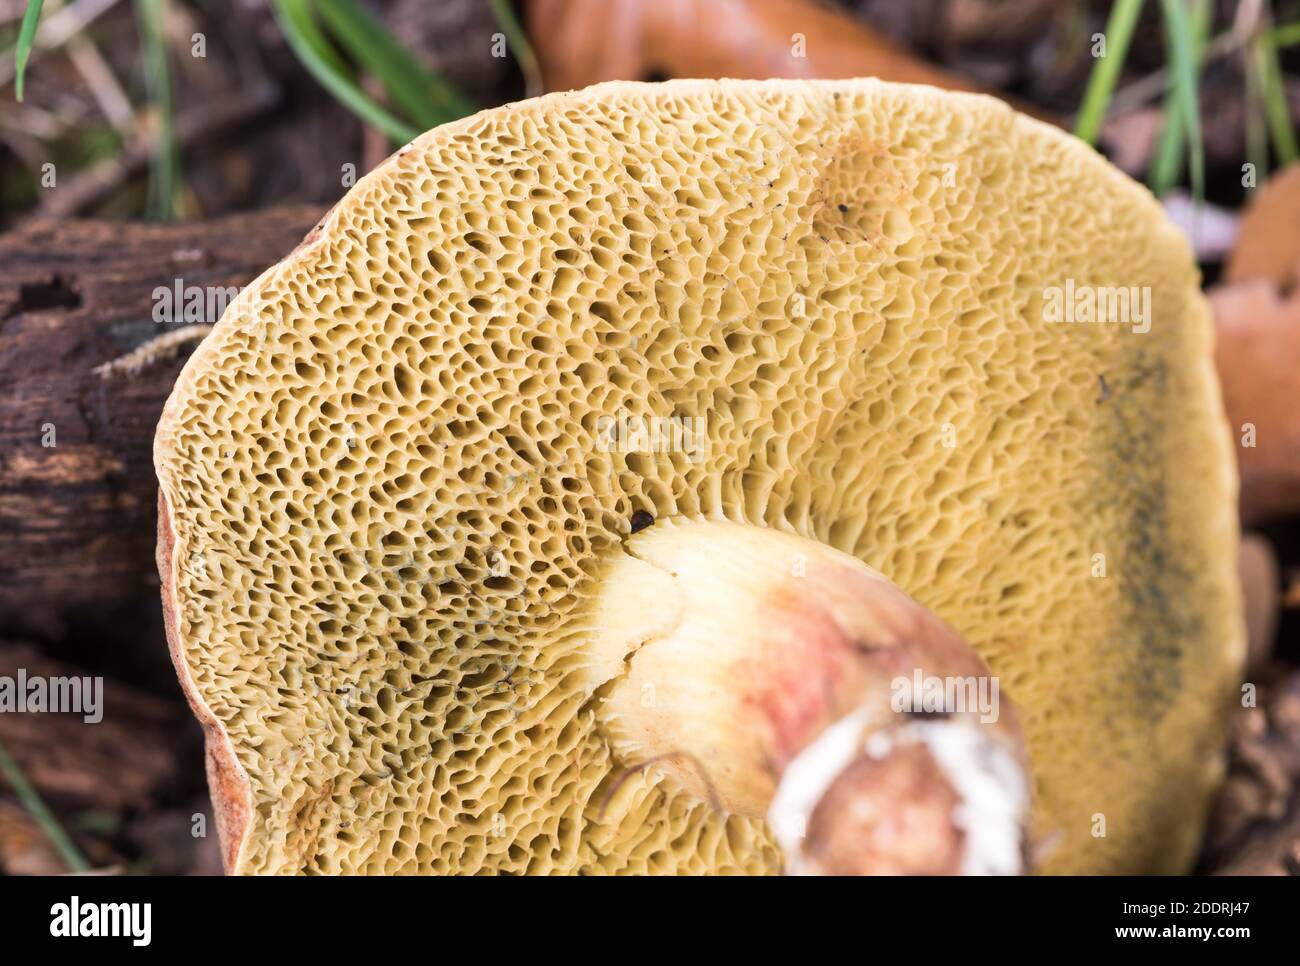 Underside of a Boletes fungus (Boletus sp) showing the tubes/ pores Stock Photo